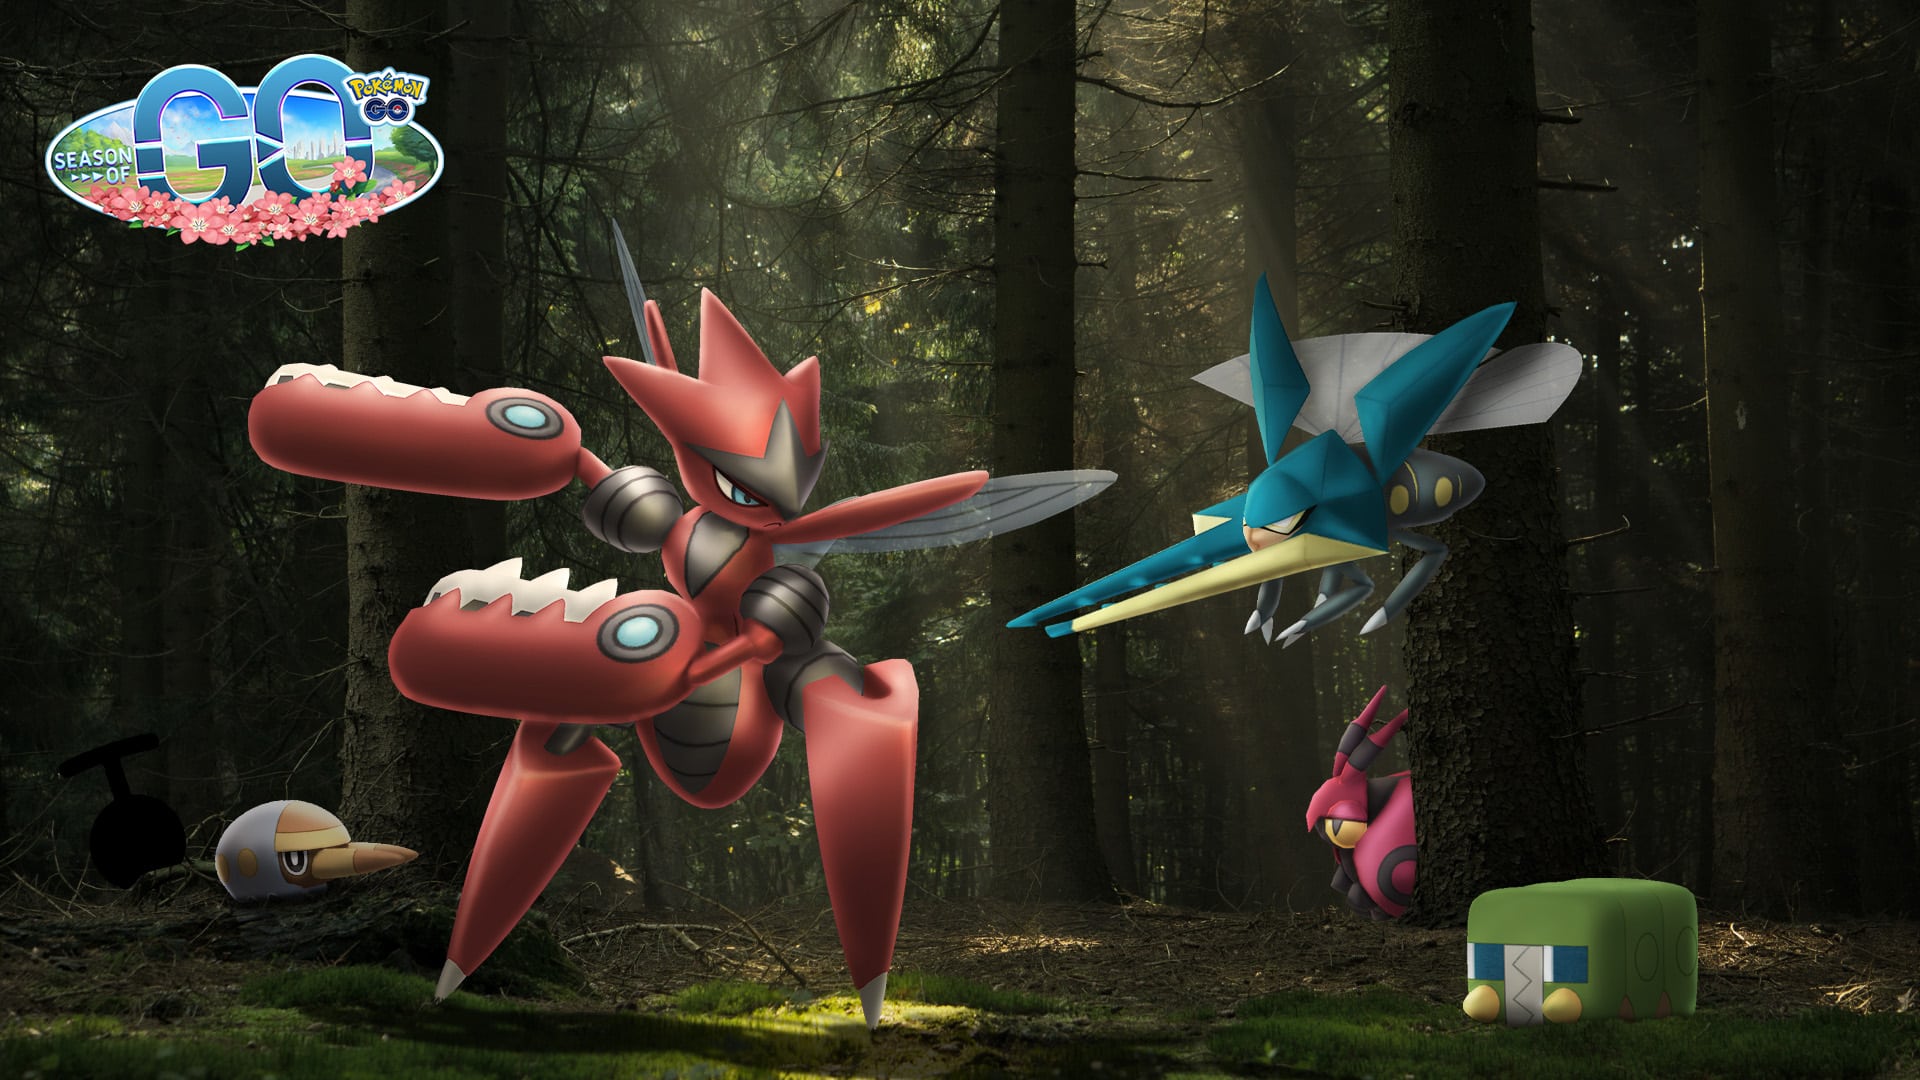 Pokémon GO evento de bichos con Mega-Scizor, Grubbin y varios pokémon shiny